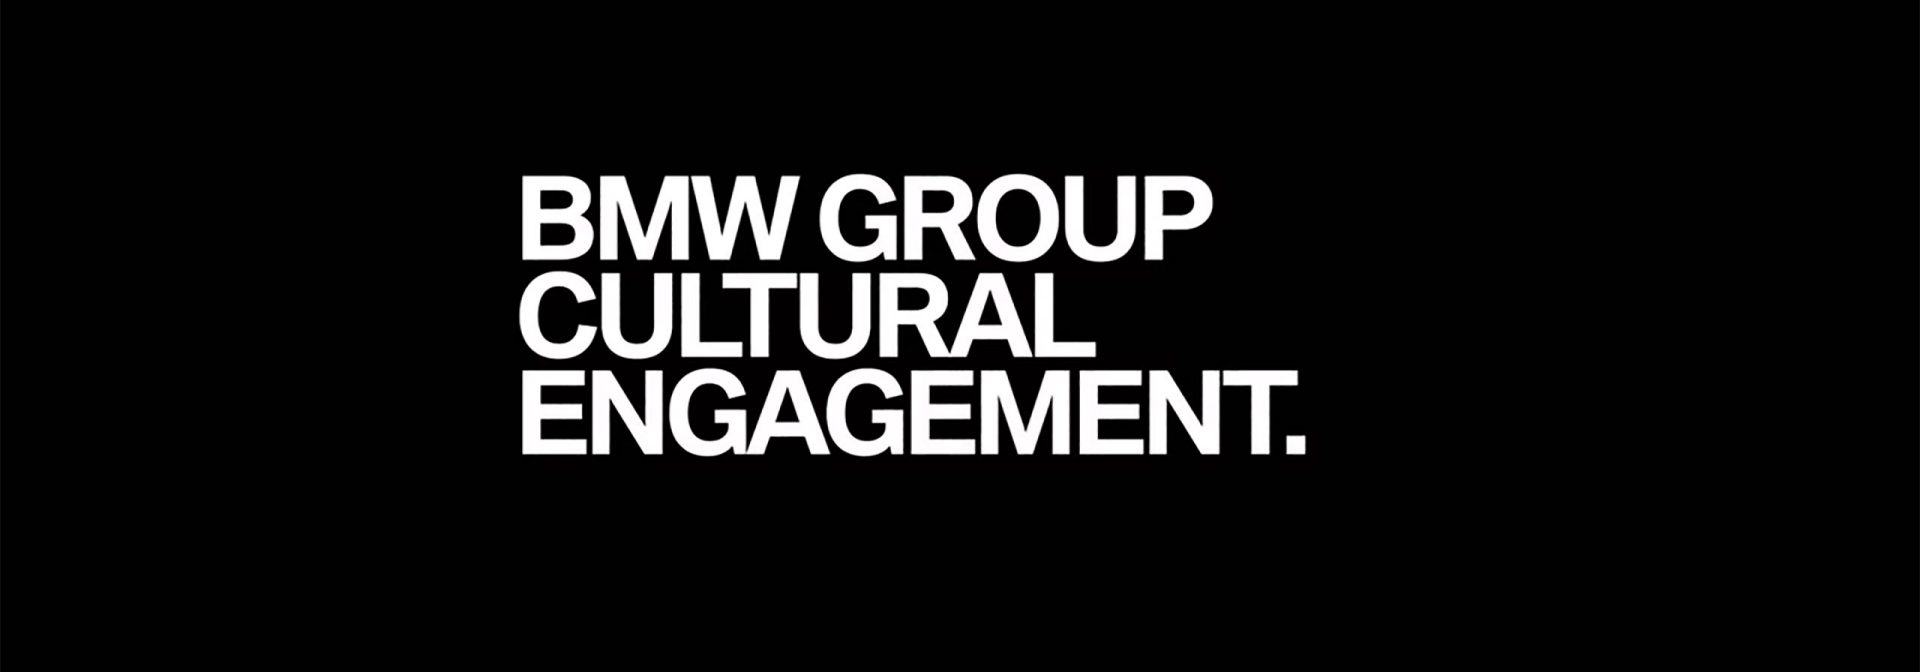 BMW Group Kulturengagement, 2021